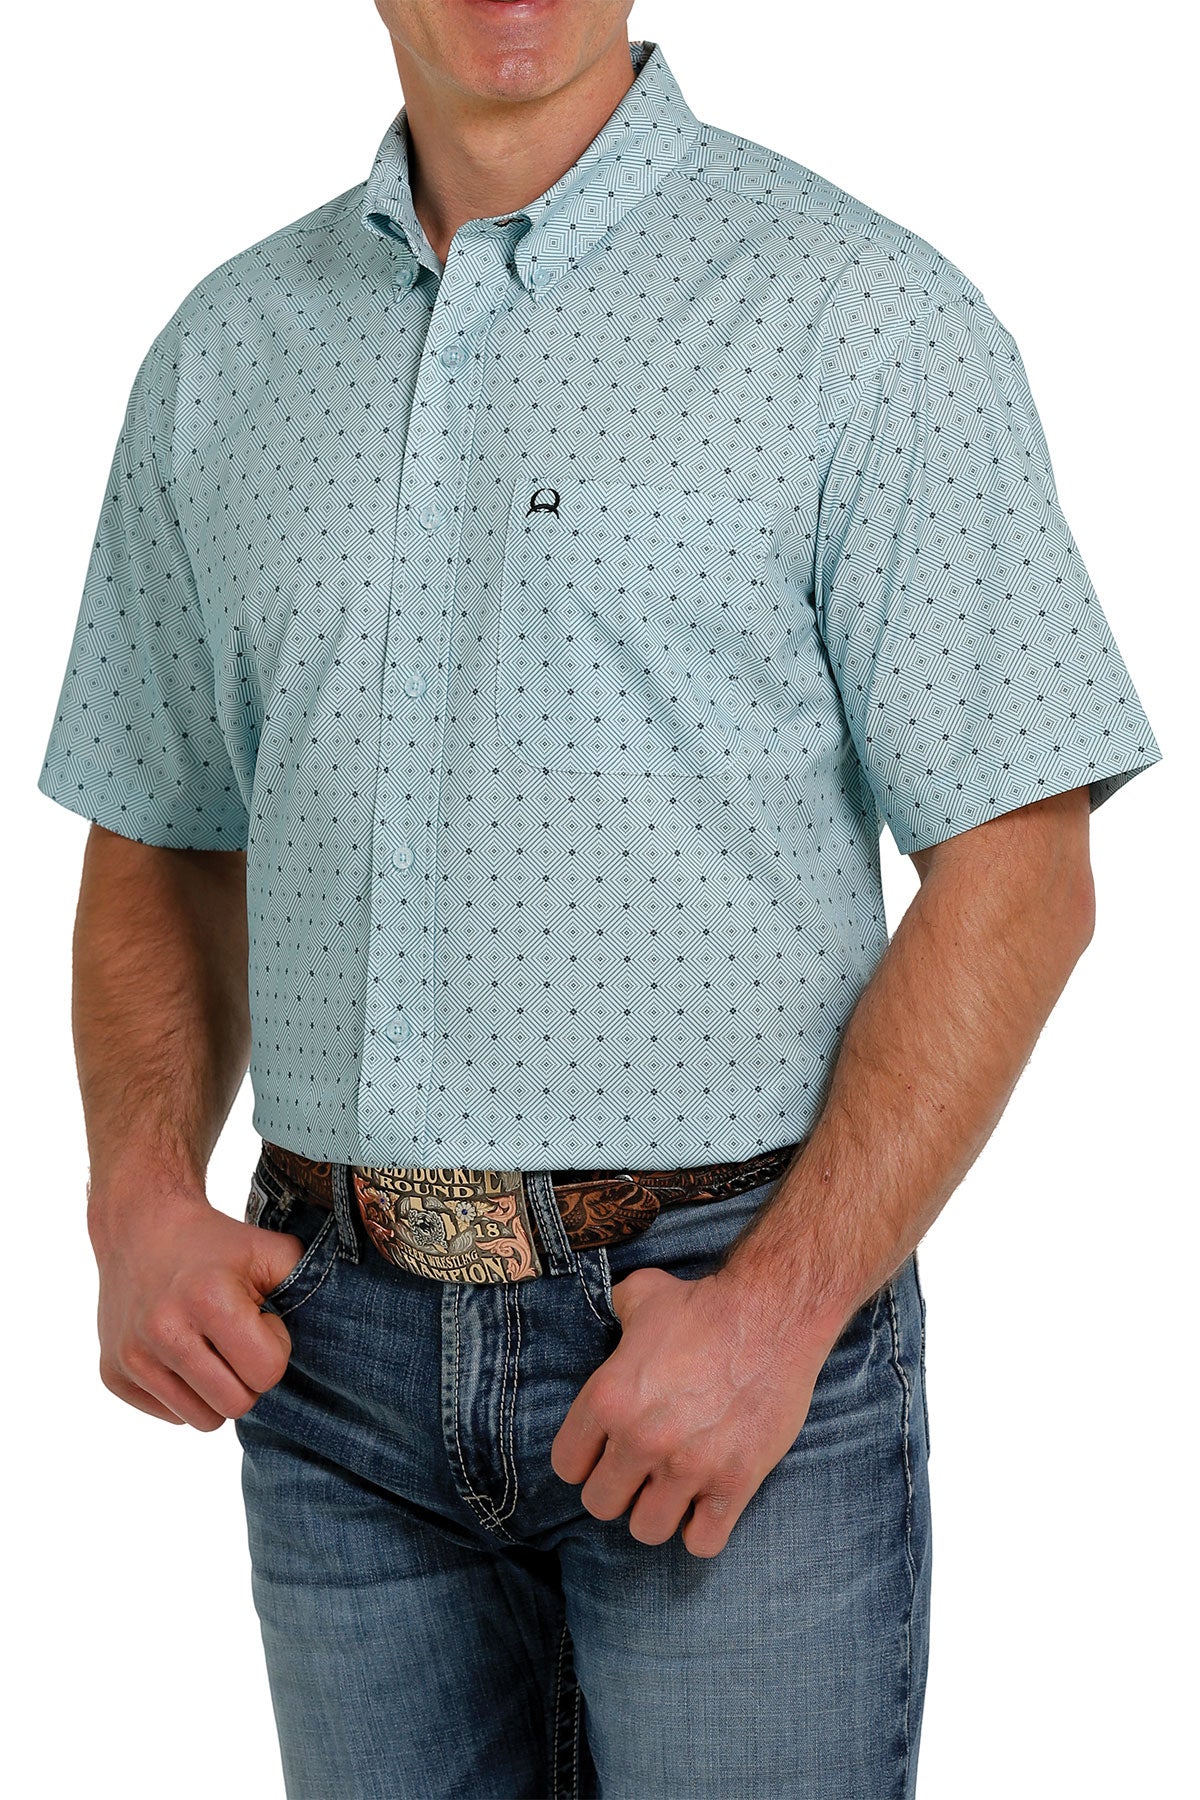 Cinch Optical Classic Fit Short Sleeve Shirt